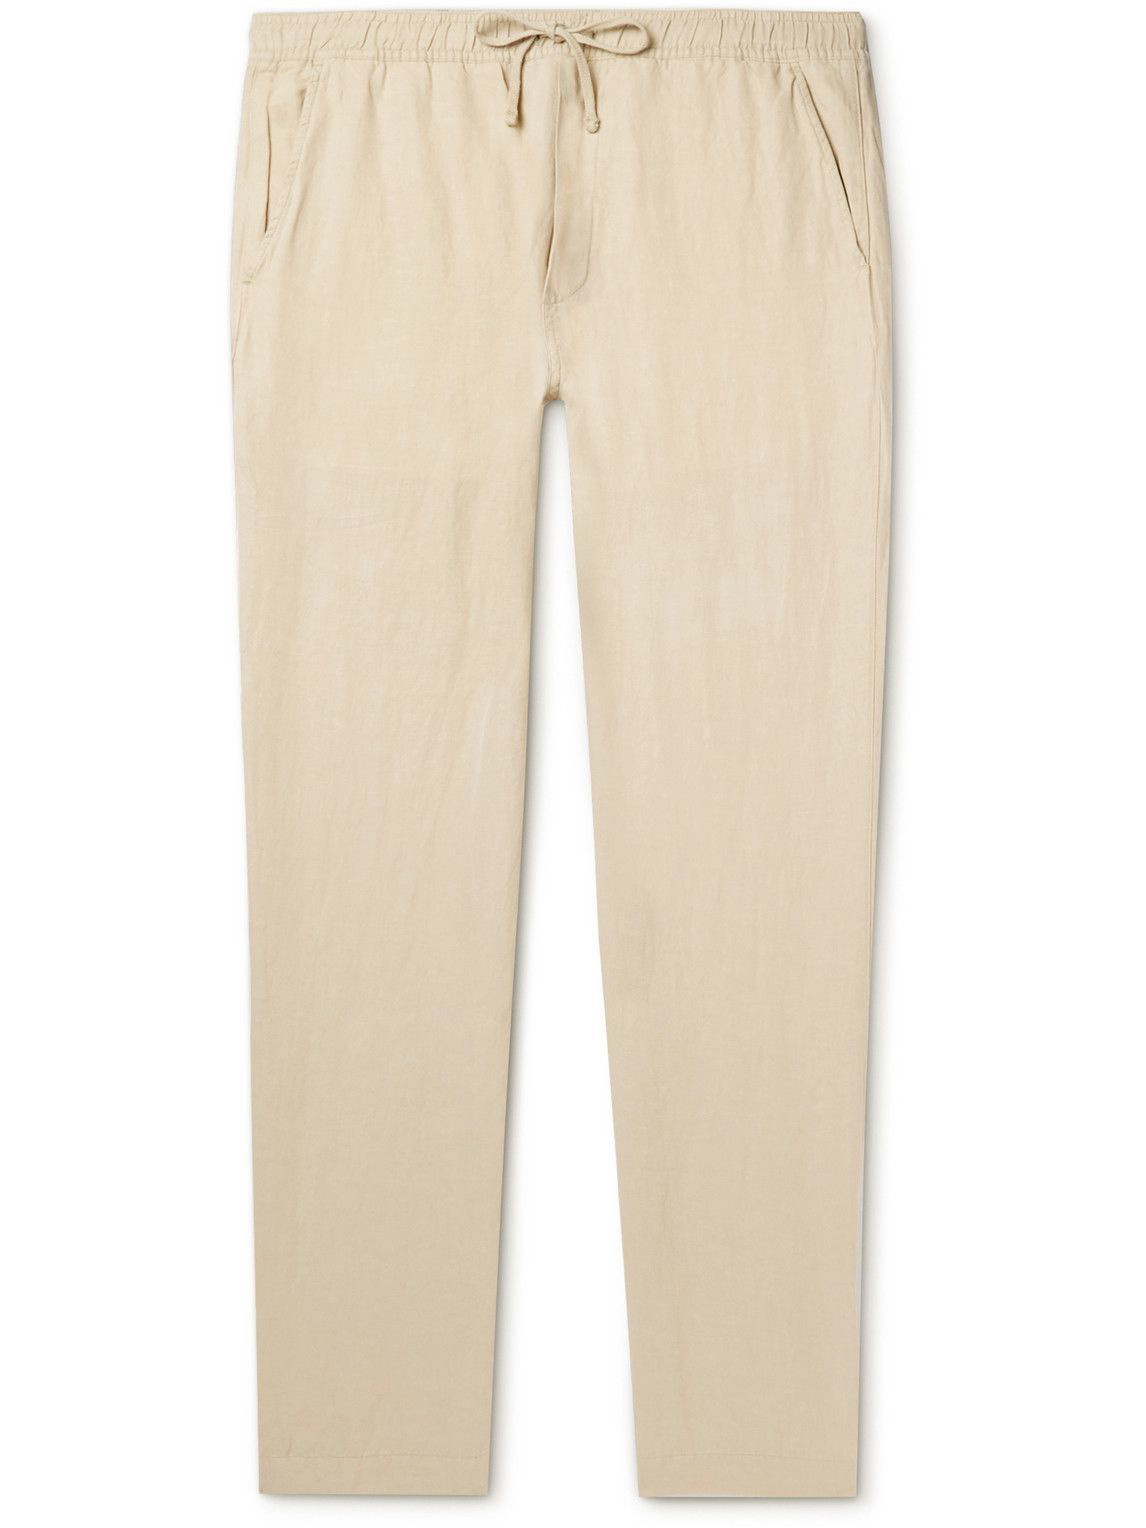 Polo Ralph Lauren Linen Trousers  Harrods US